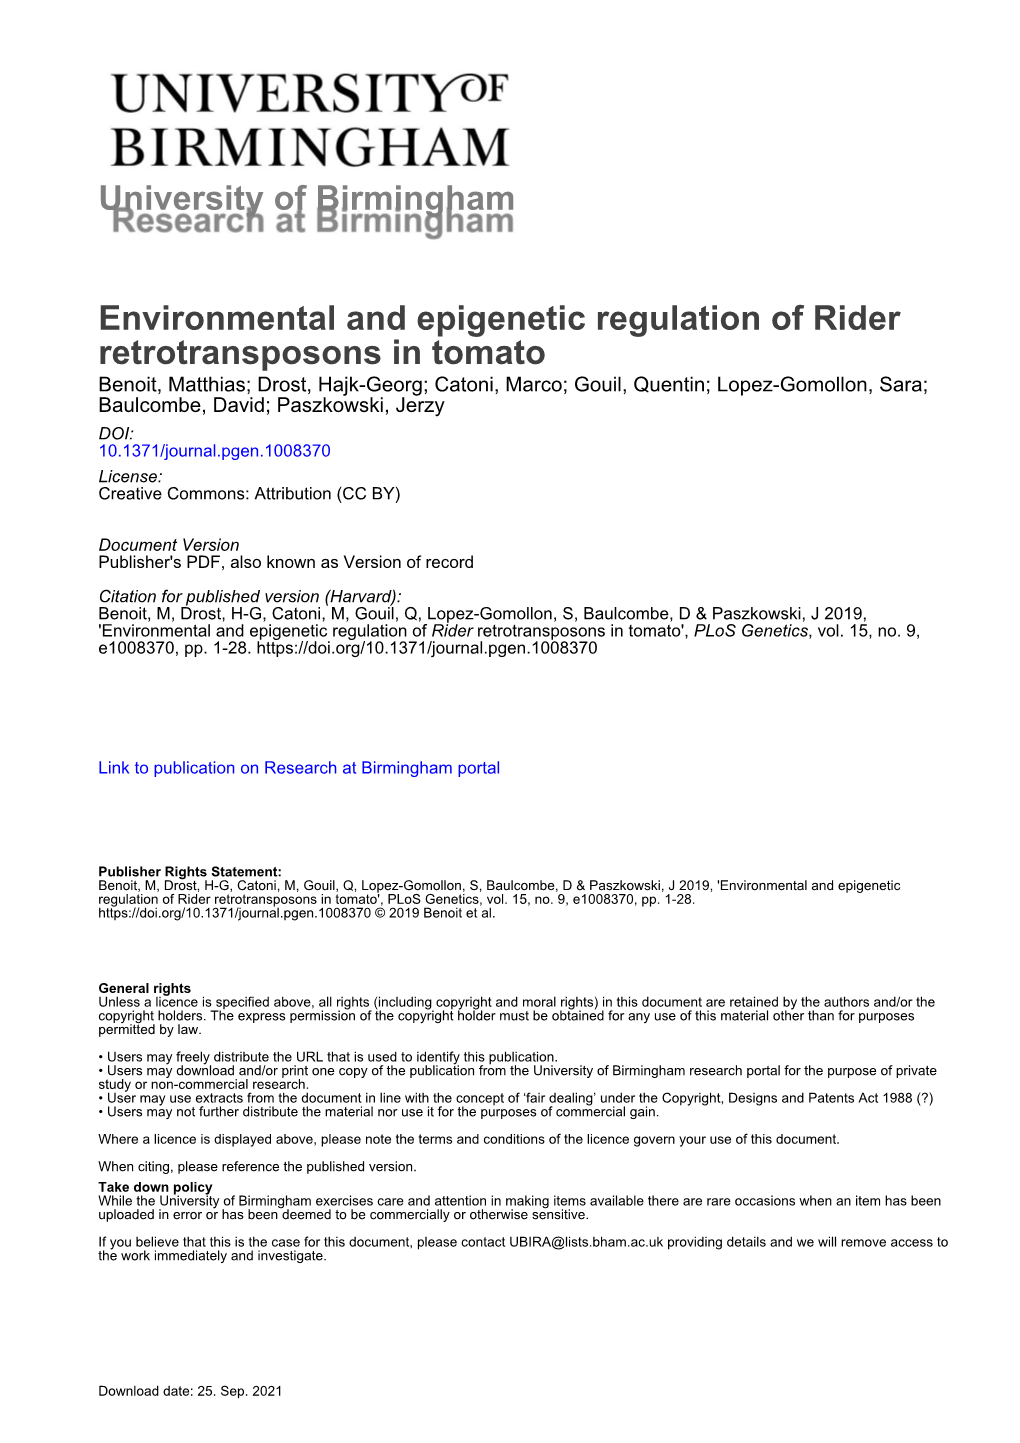 Environmental and Epigenetic Regulation of Rider